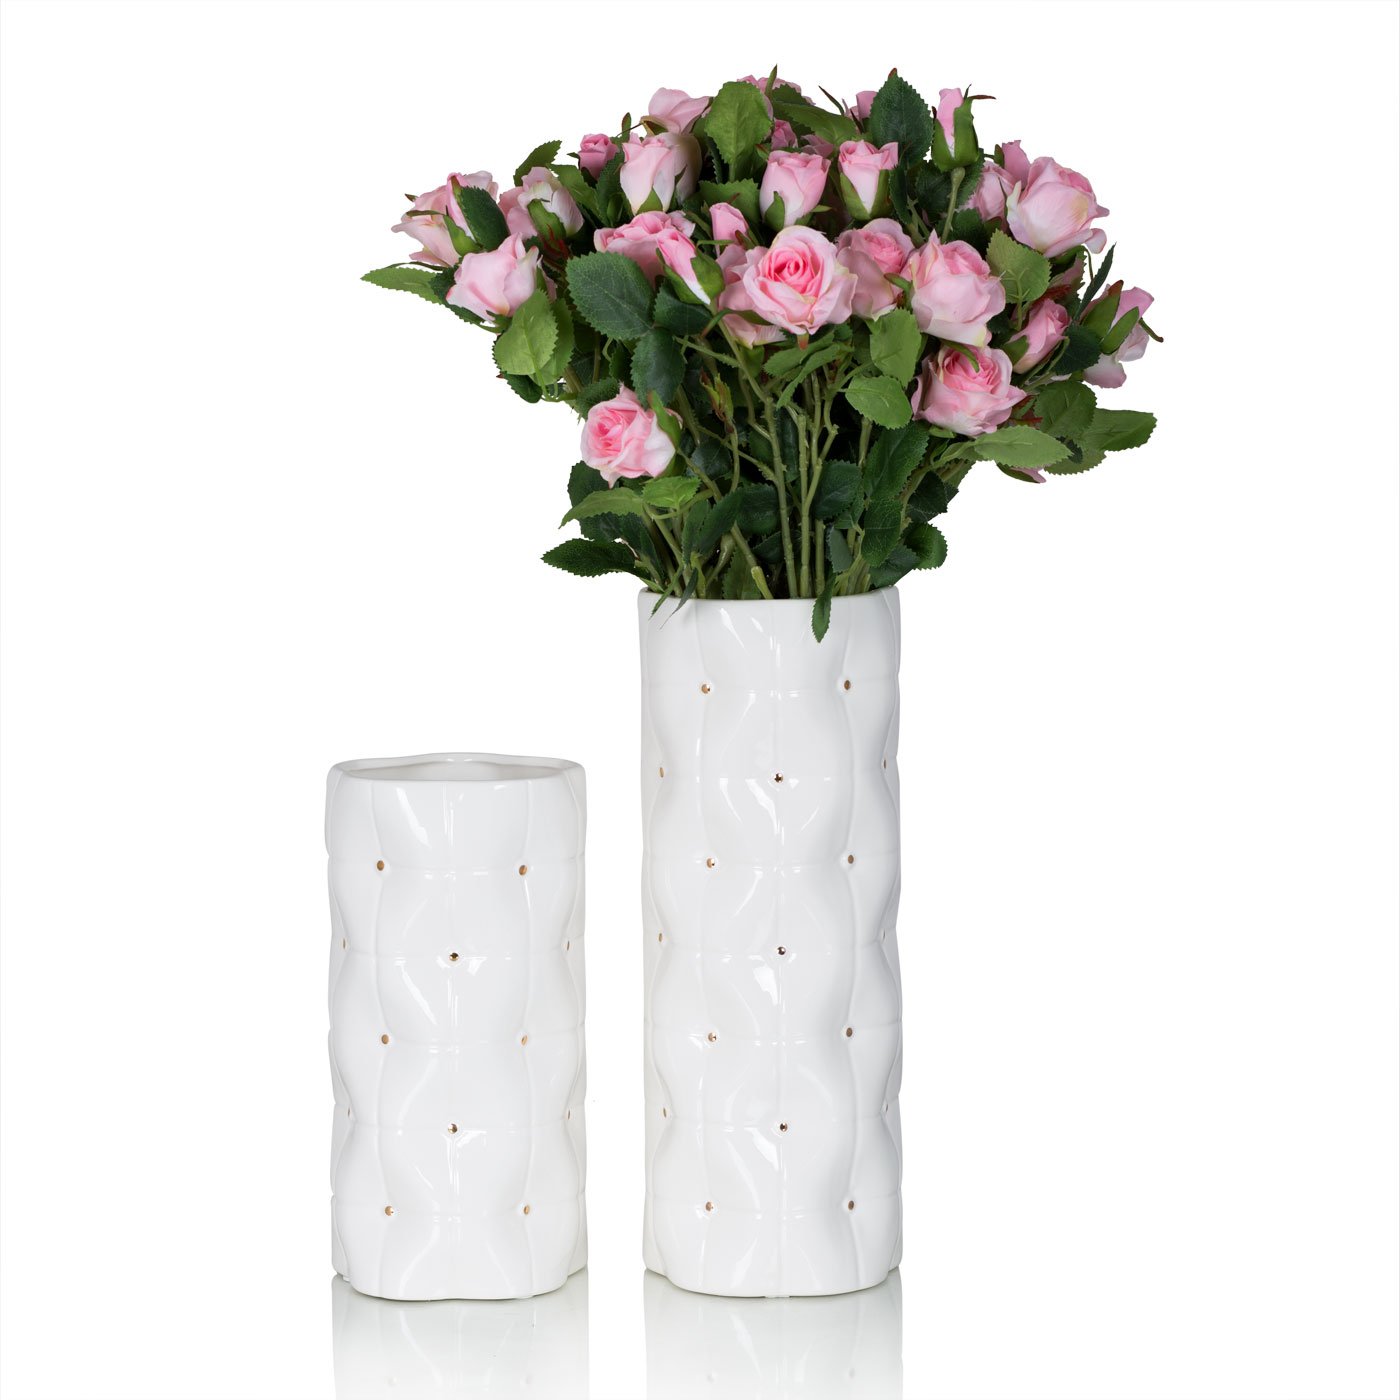 Ваза для больших букетов. Вазы Home Philosophy hph375265. Ваза для высоких роз. Вазы для цветов. Модные вазы для цветов.